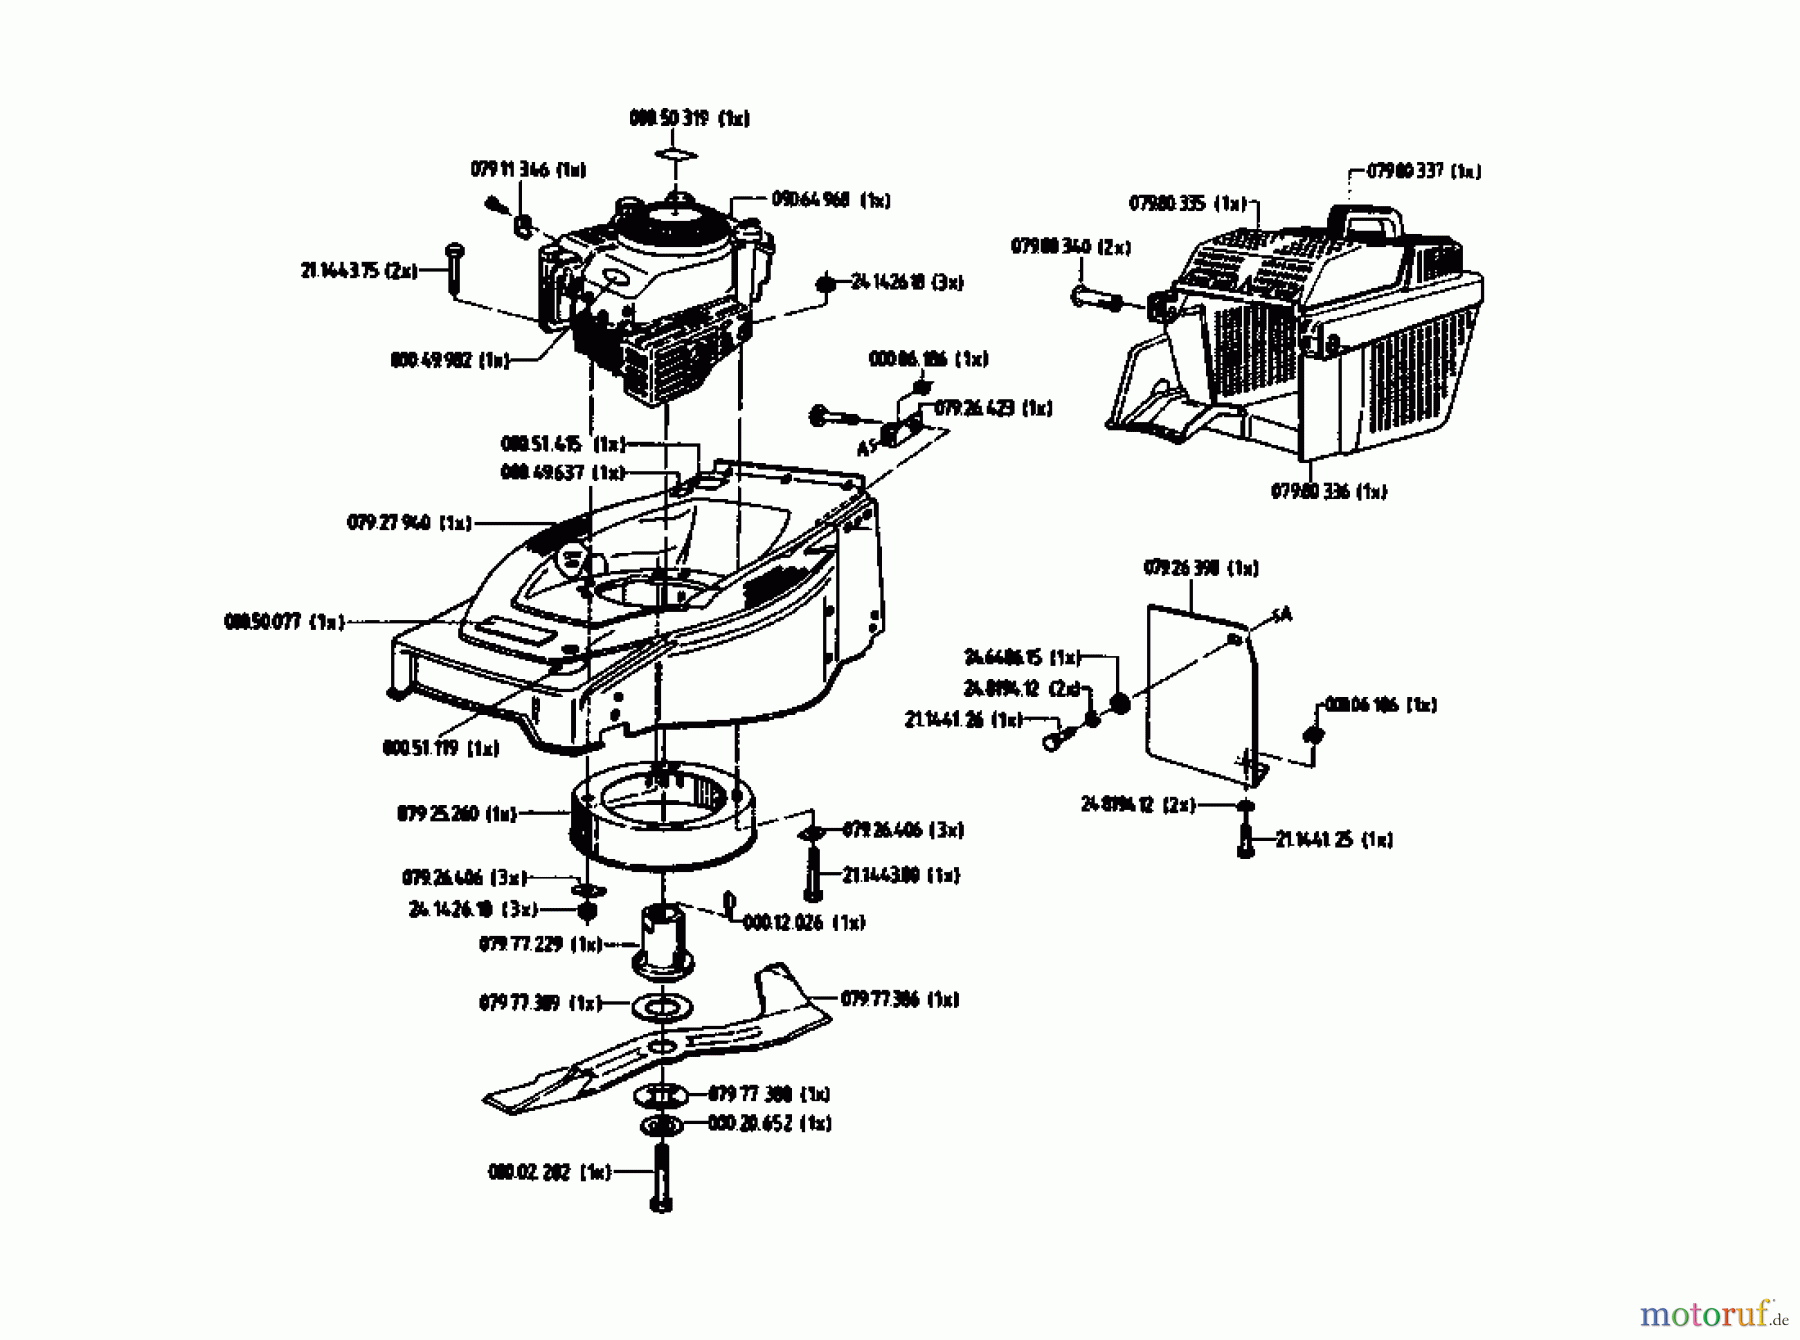  Gutbrod Petrol mower HB 48 L 02814.01  (1993) Basic machine